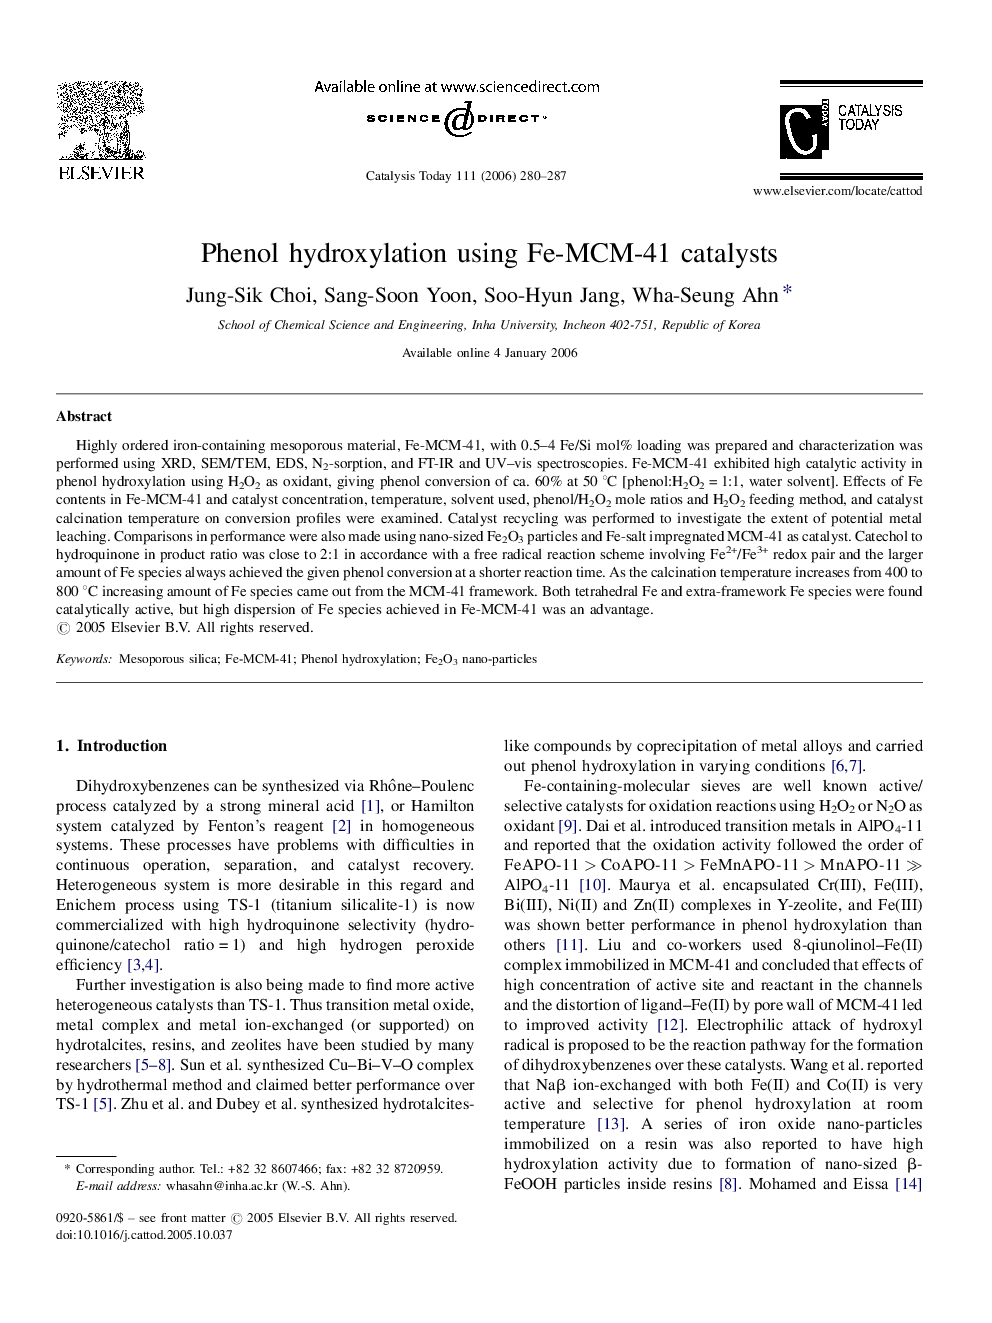 Phenol hydroxylation using Fe-MCM-41 catalysts